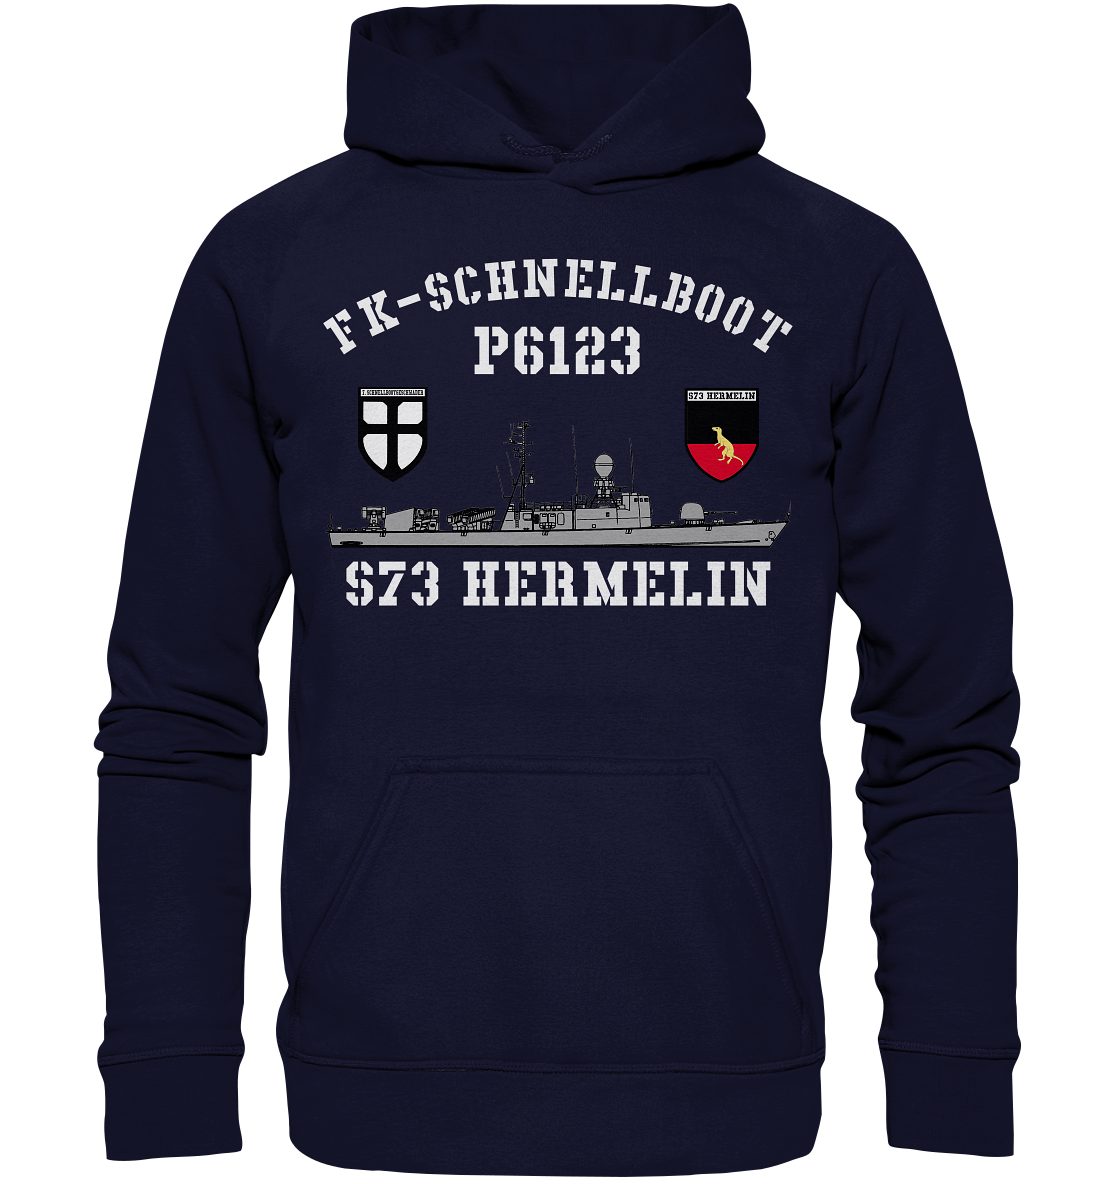 P6123 S73 HERMELIN 7.SG - Basic Unisex Hoodie XL